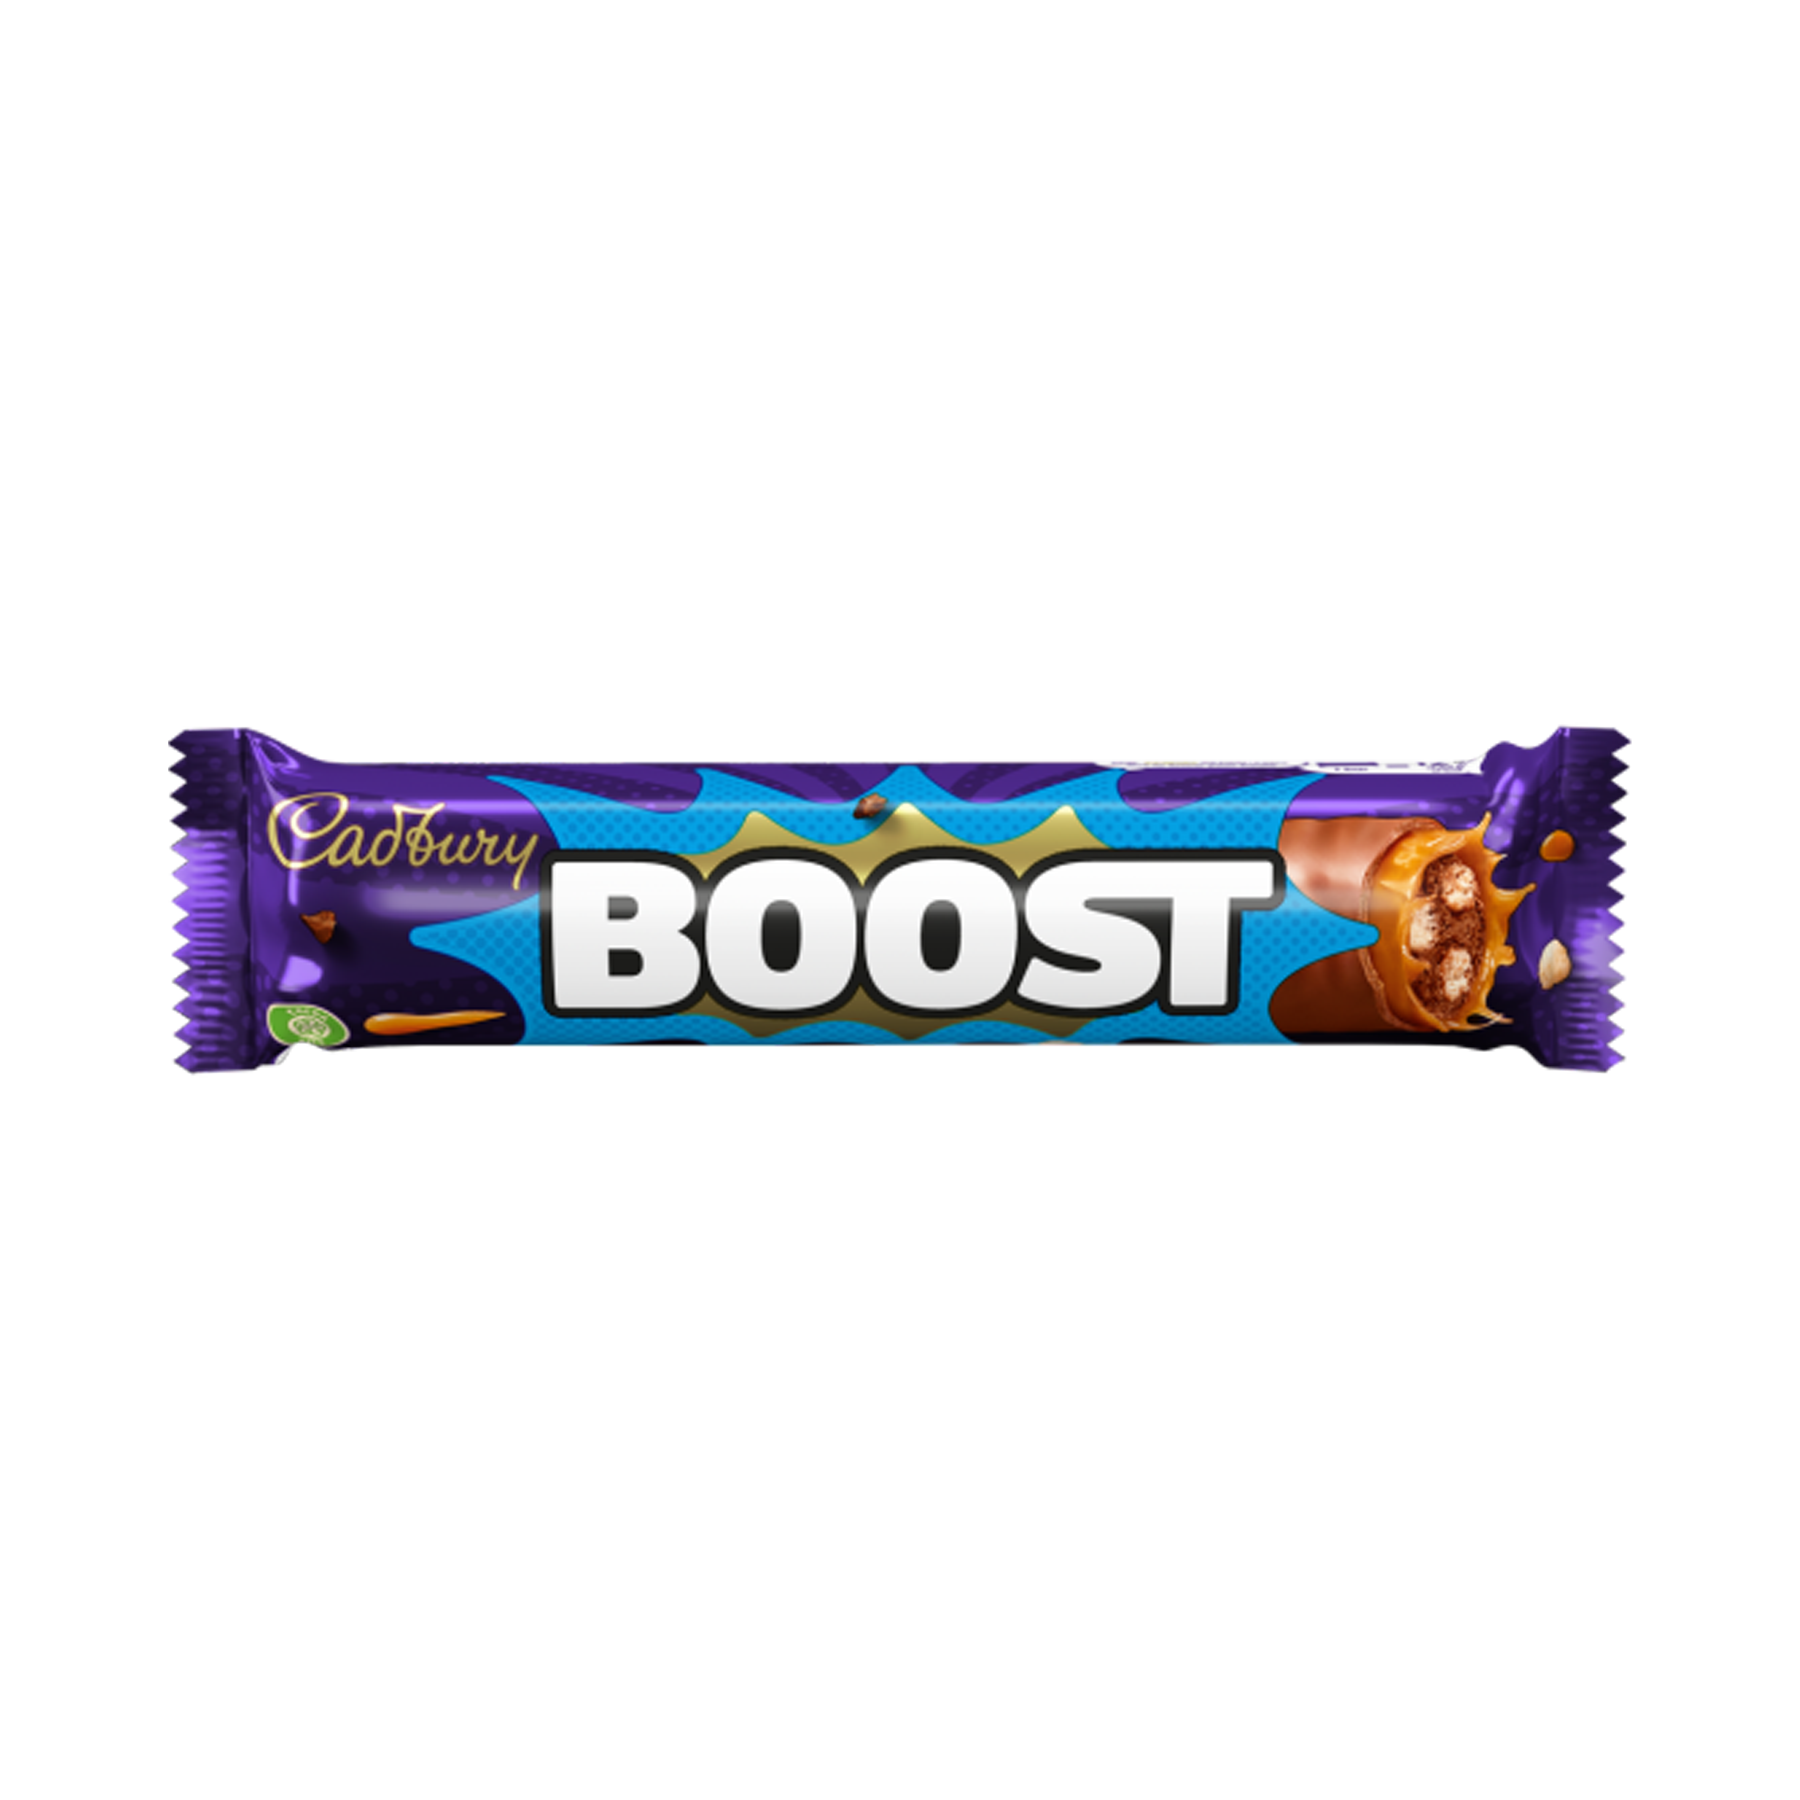 Cadbury Boost Chocolate Bar (43g)